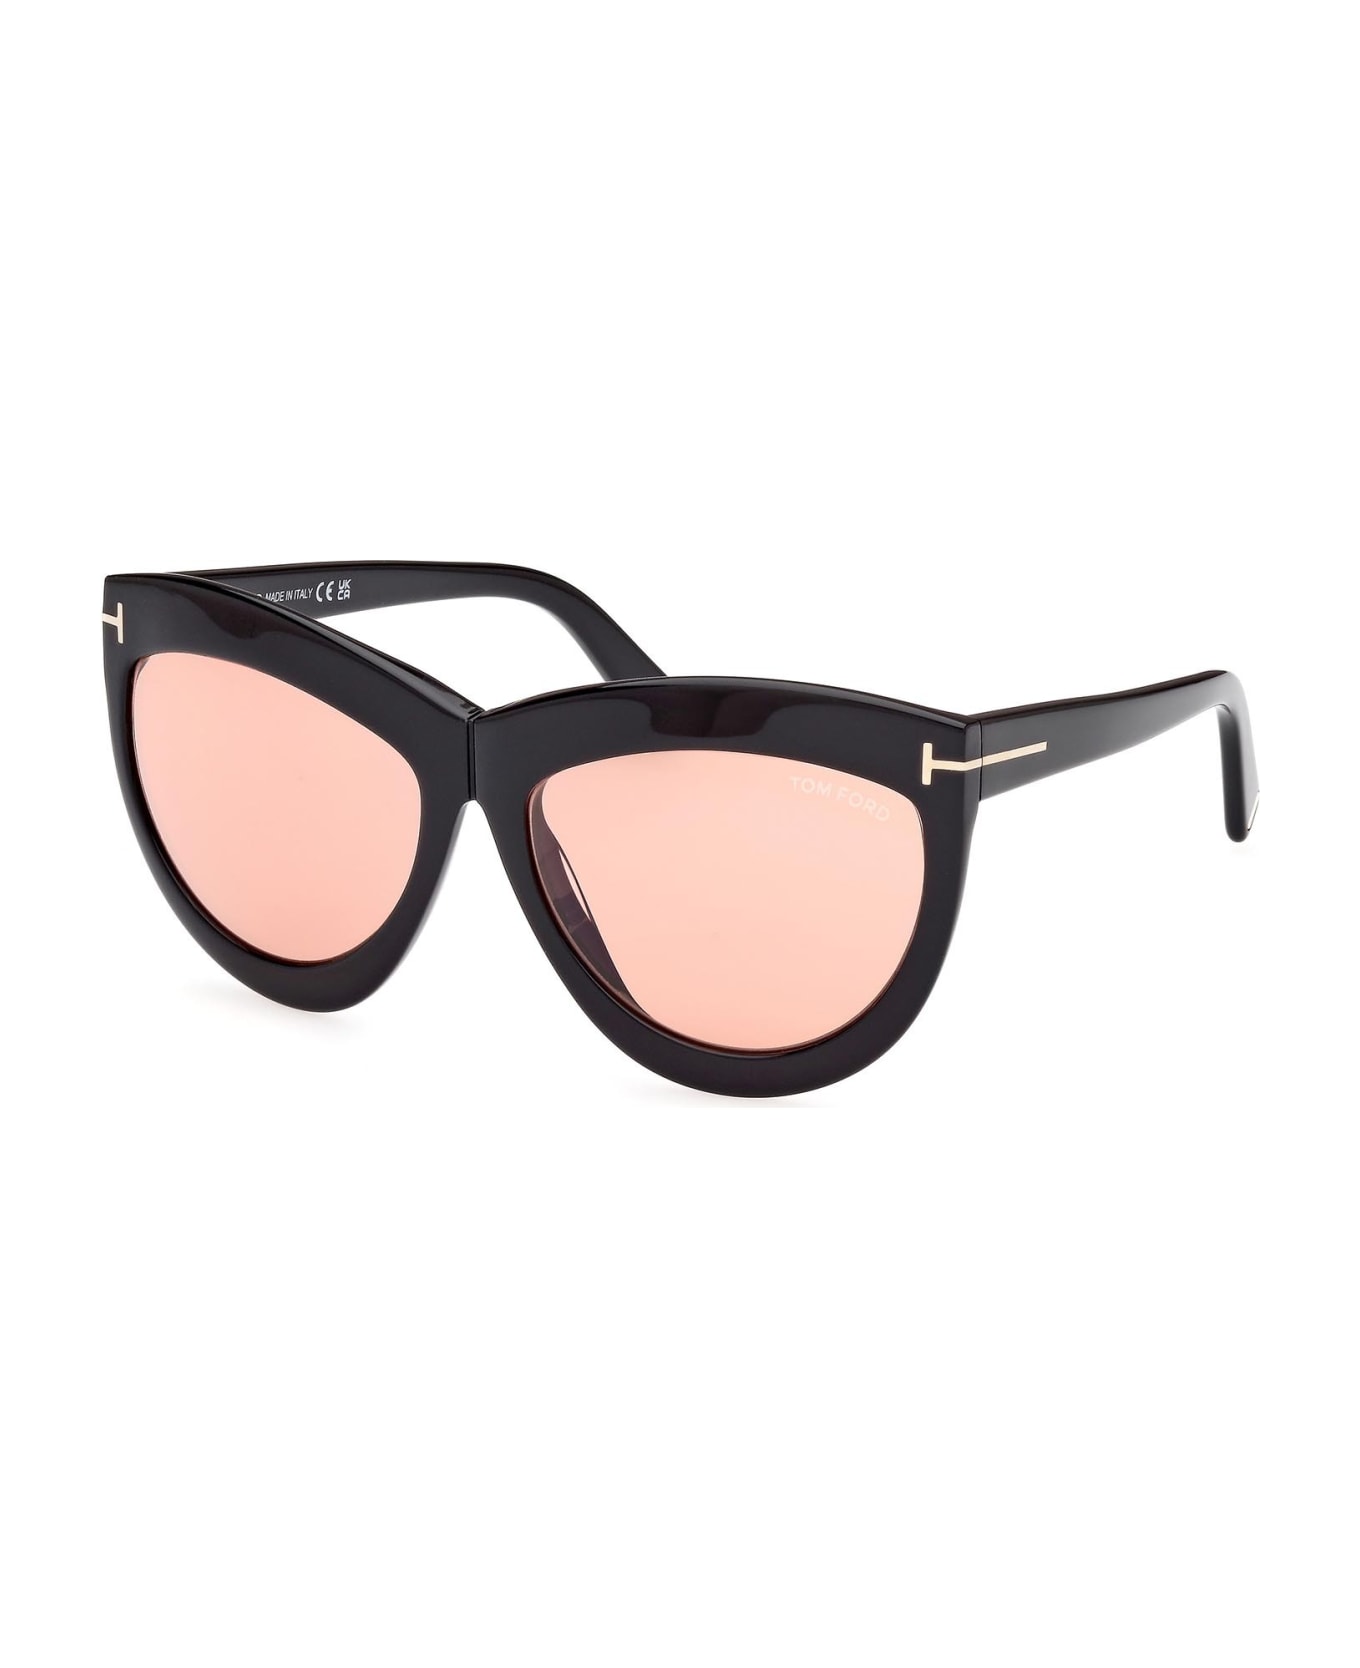 Tom Ford Eyewear Sunglasses サングラス